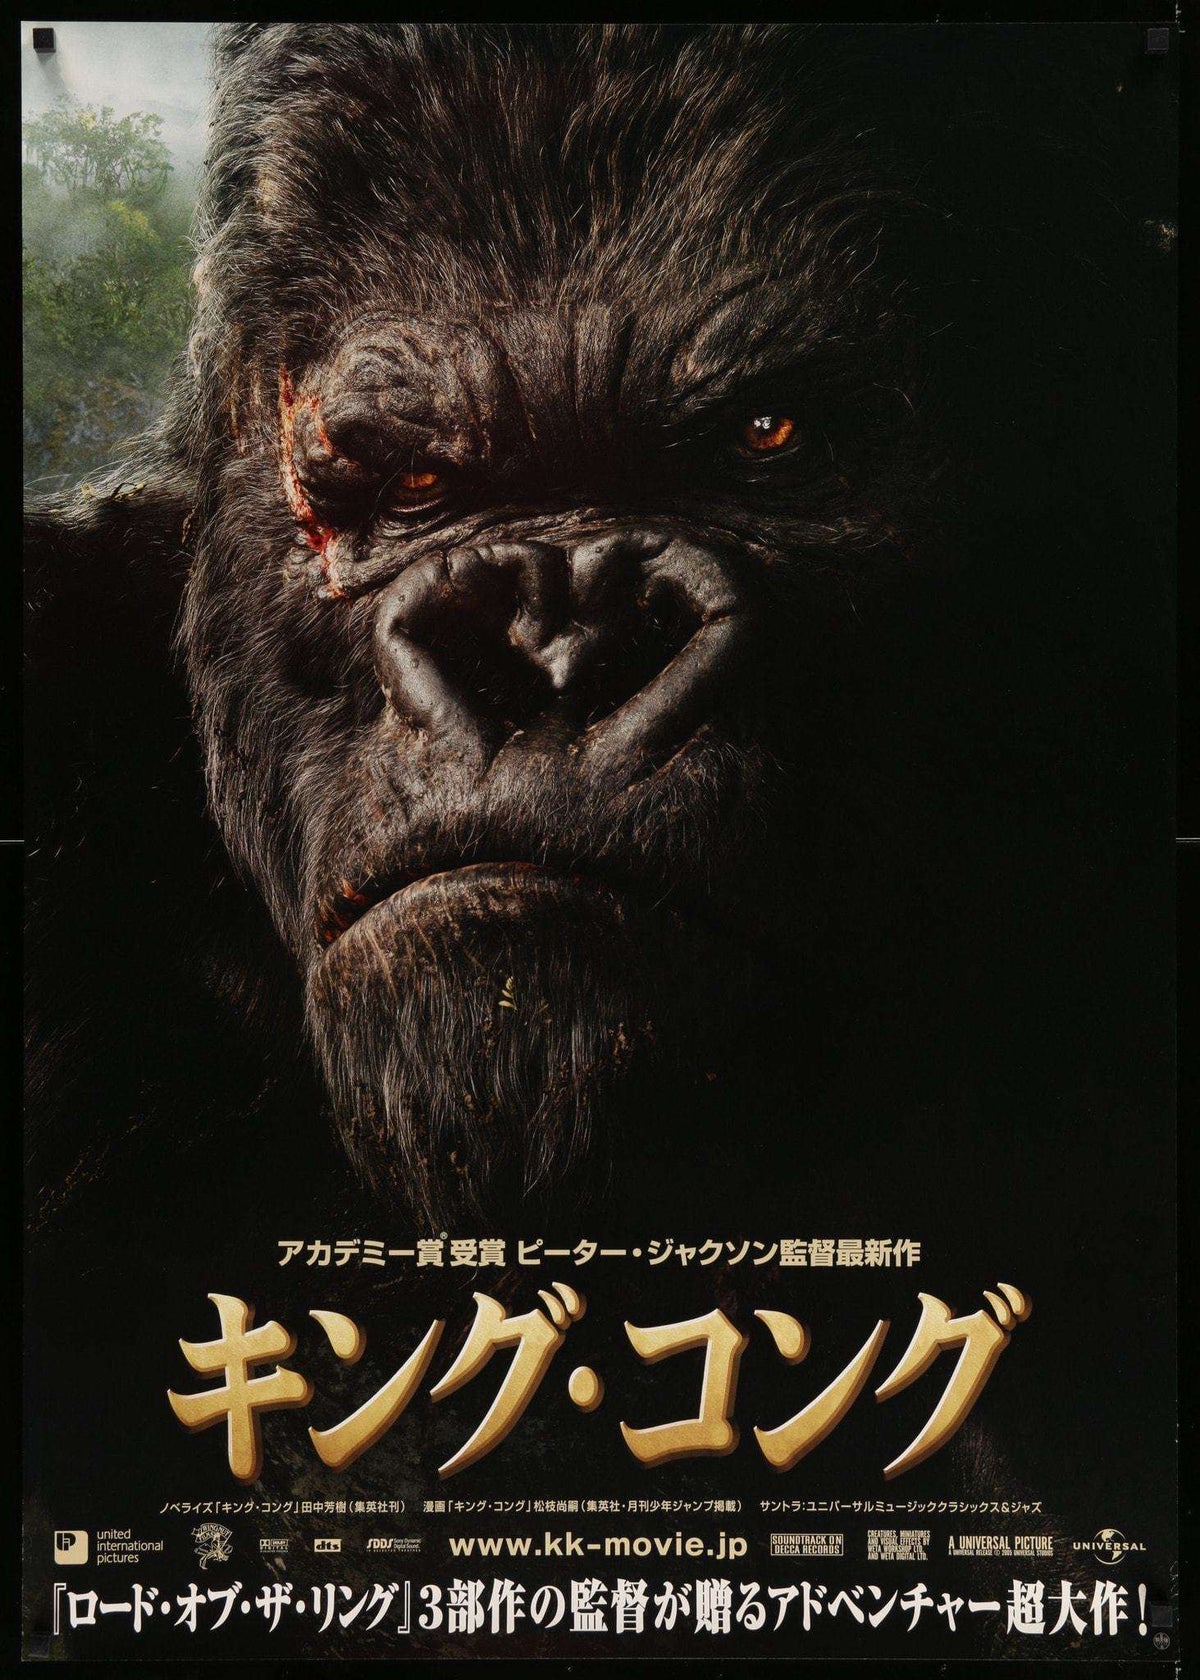 King Kong (2005) original movie poster for sale at Original Film Art